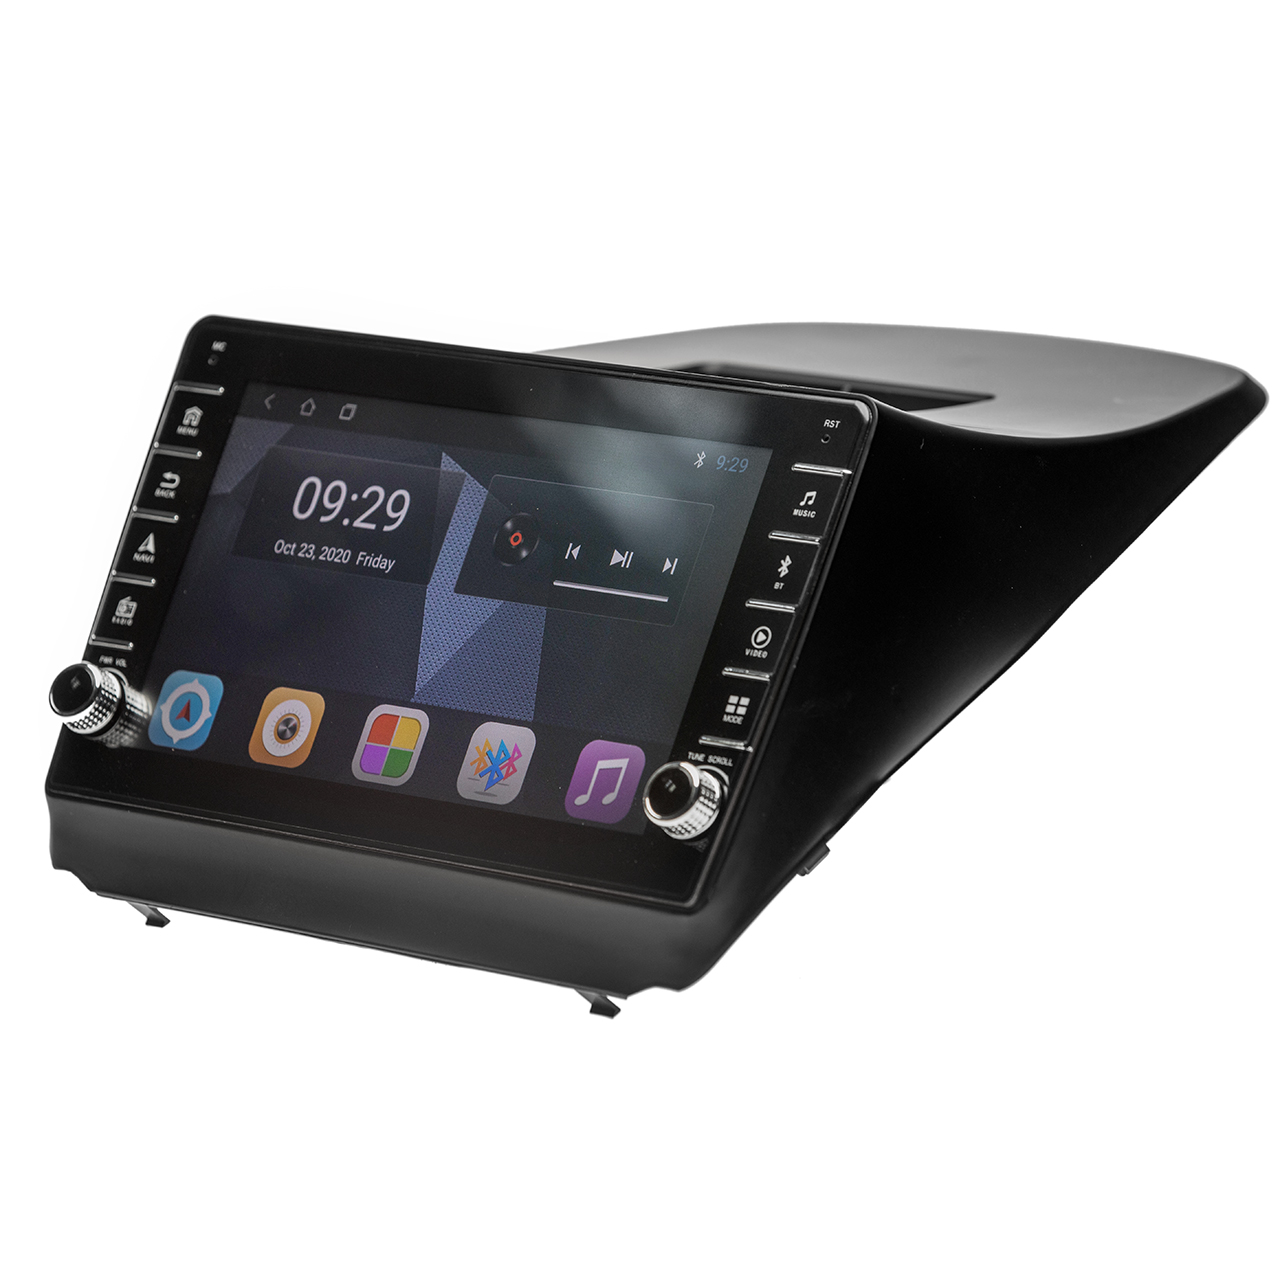 Navigatie AUTONAV ECO Android GPS Dedicata Hyundai Tucson ix35 2009-2015, Model PRO Memorie 16GB Stocare, 1GB DDR3 RAM, Butoane Laterale Si Regulator Volum, Display 8